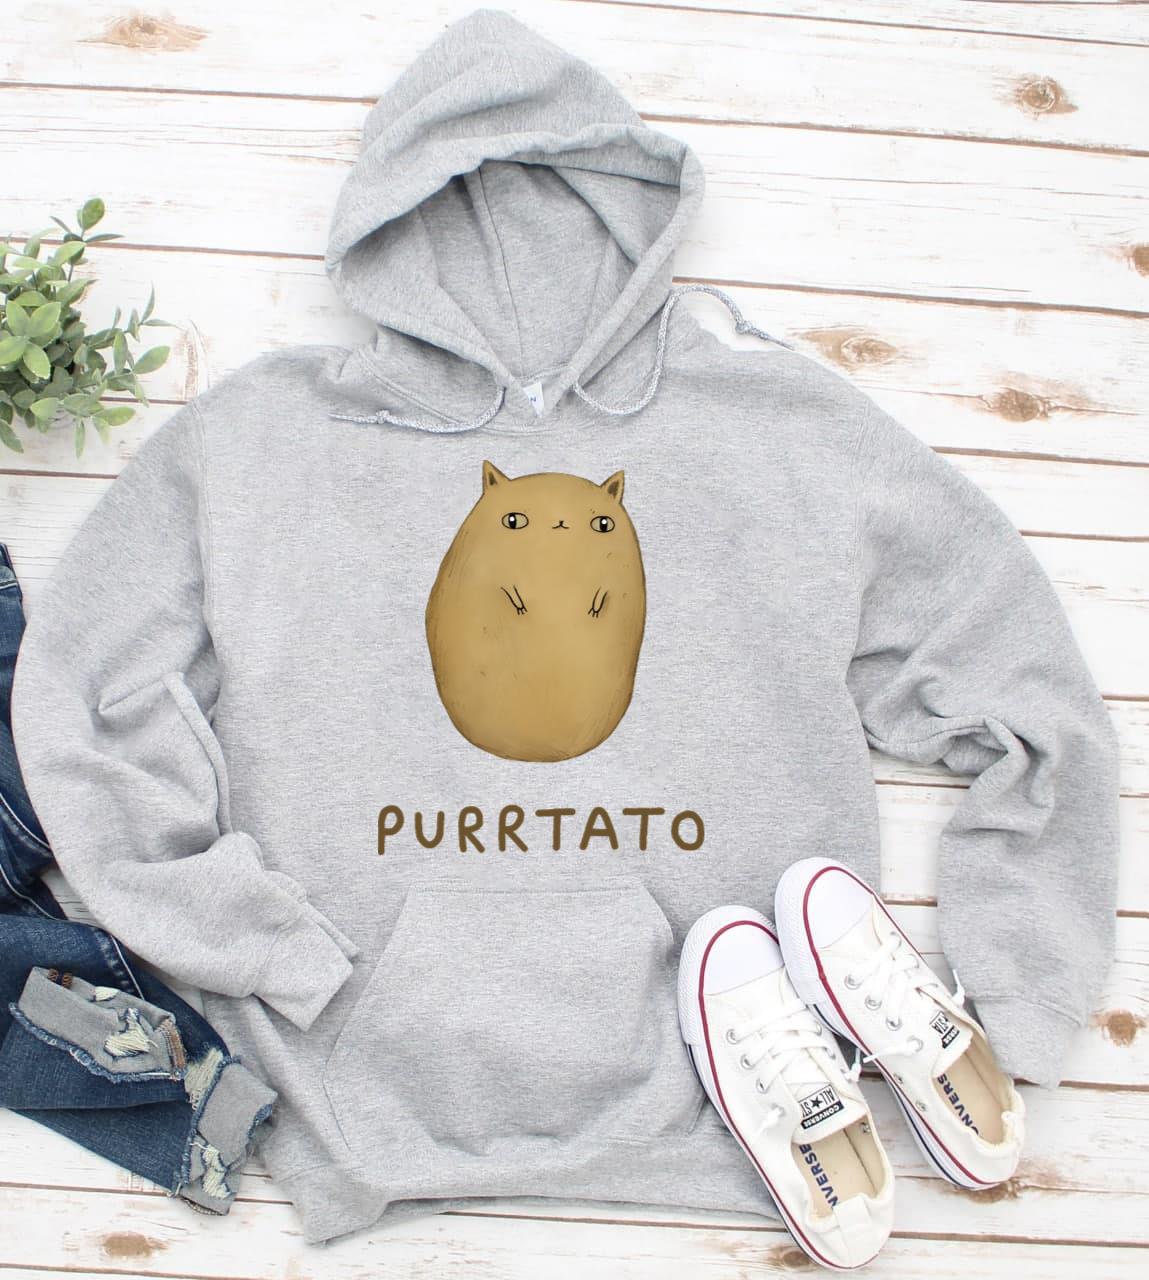 Purrtato Cute Spud Potato T-Shirt Cat Lover